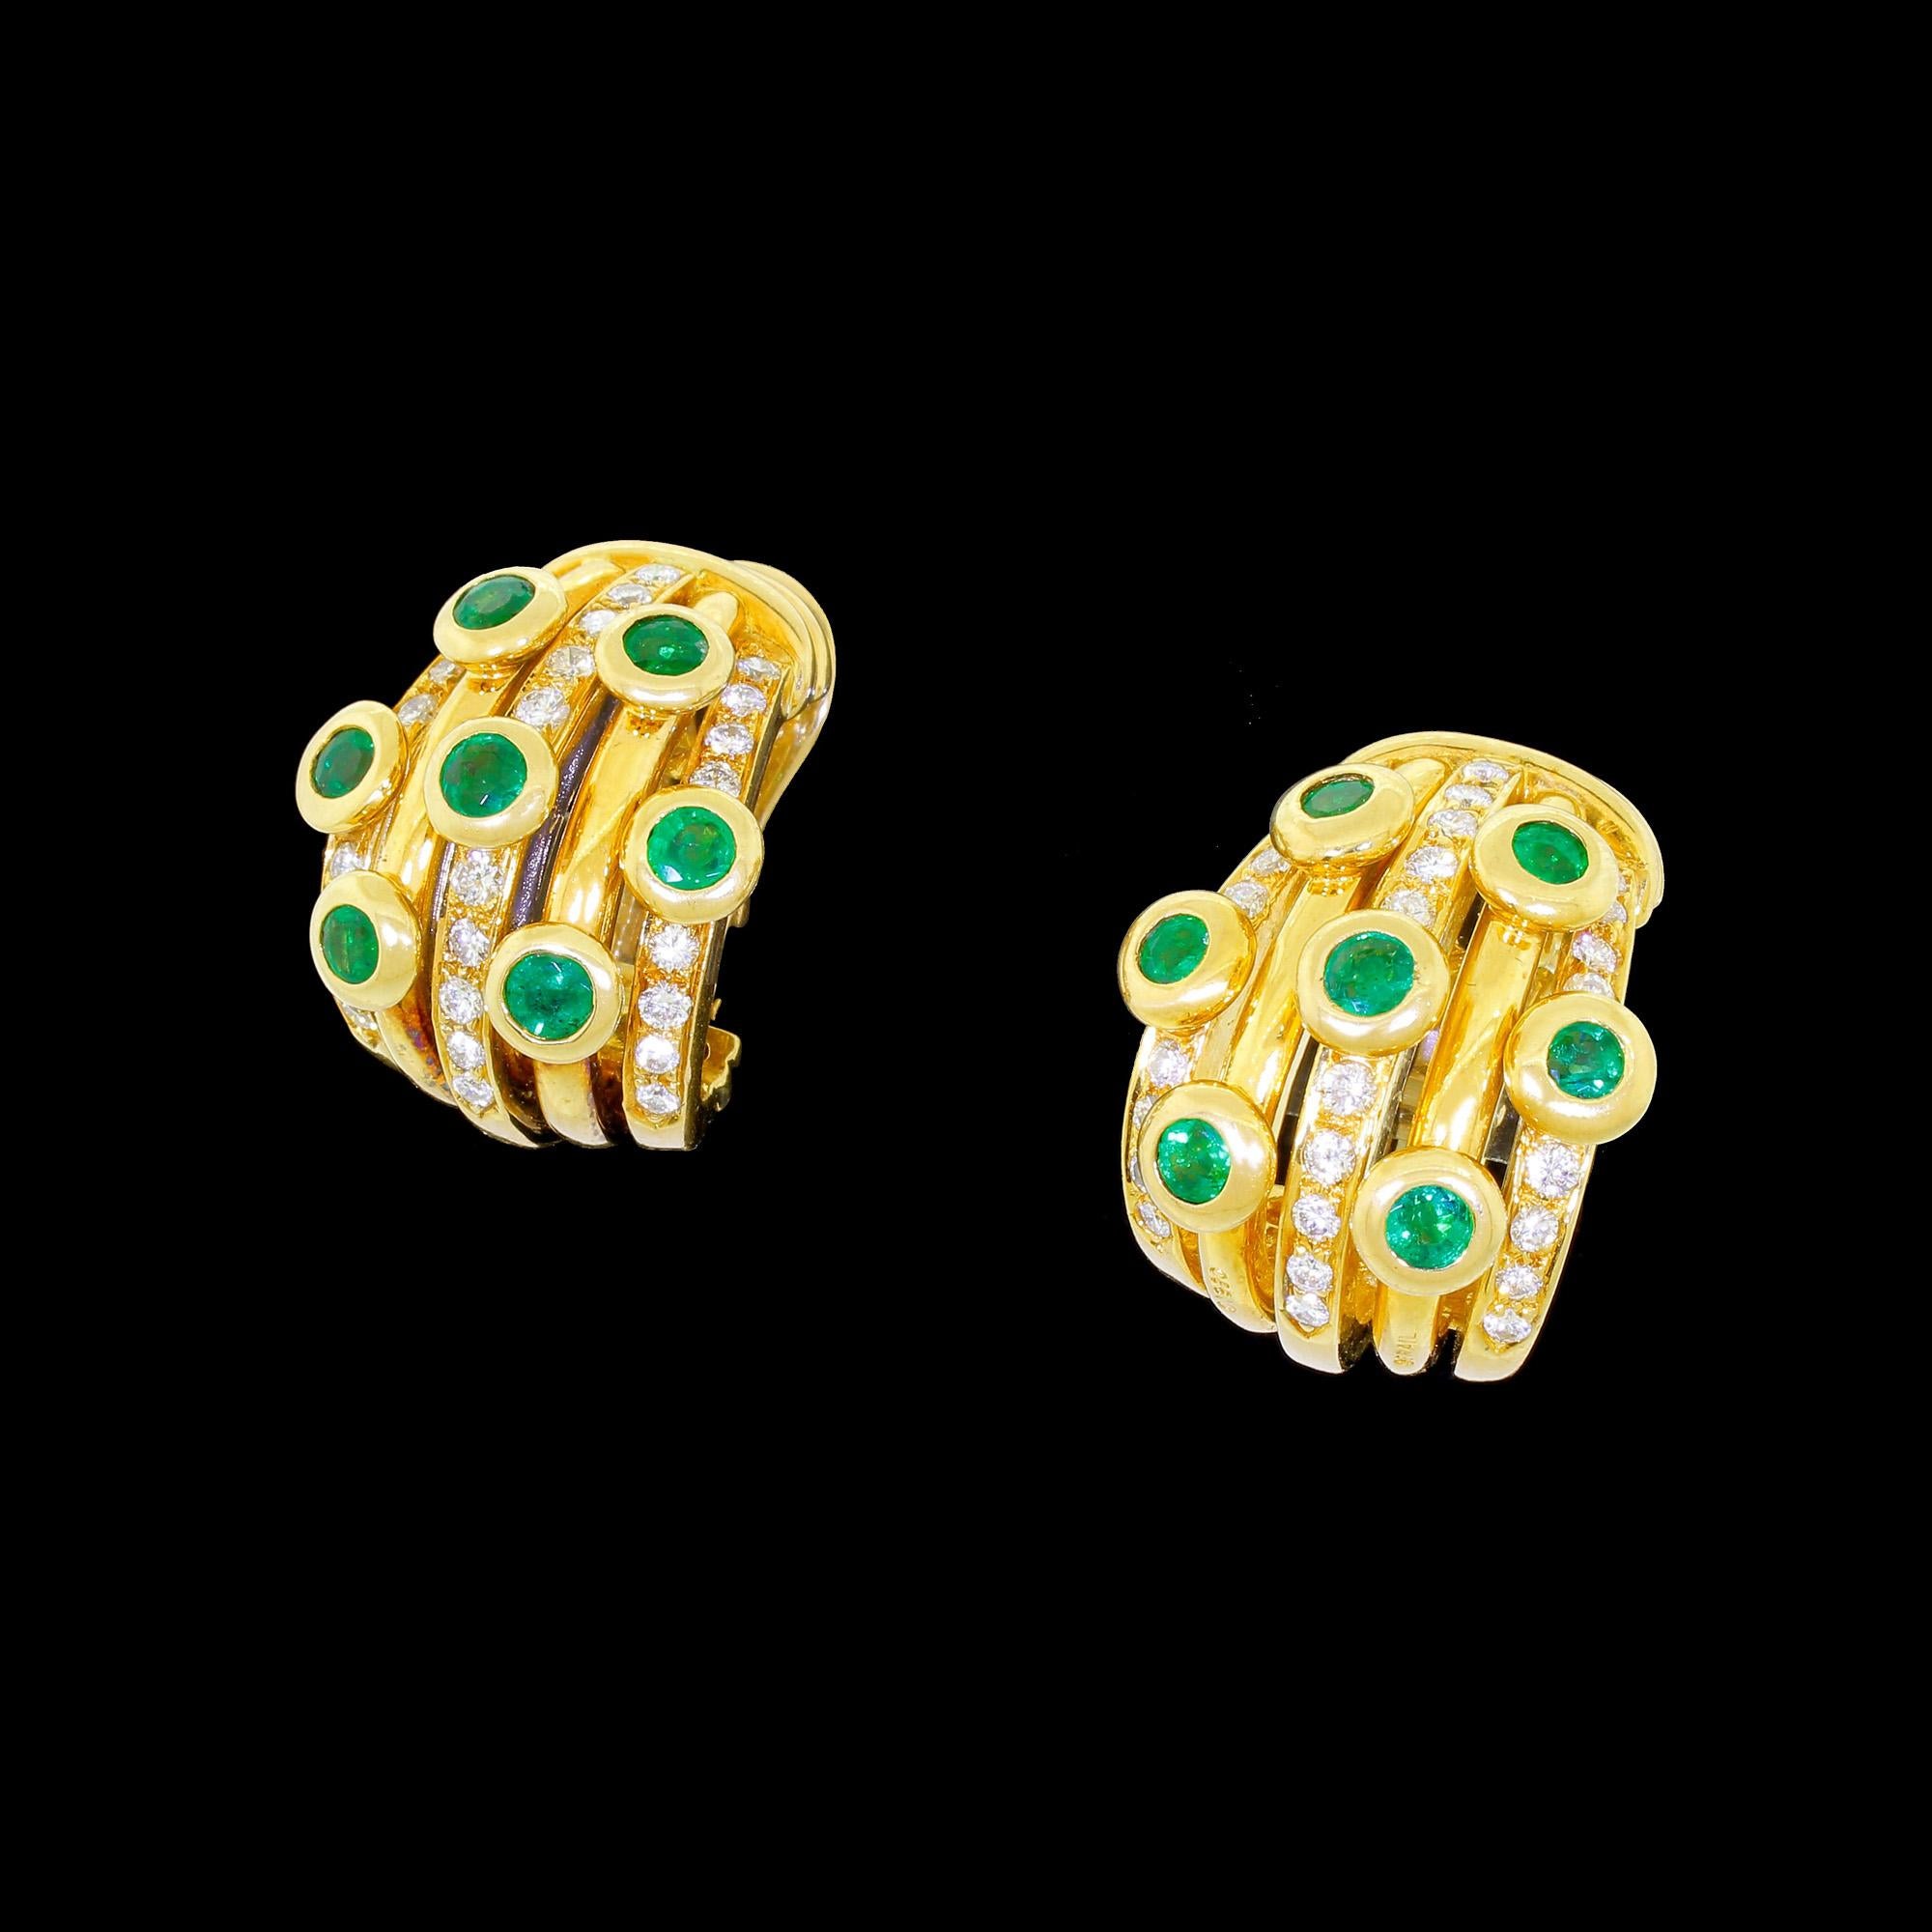 Modern Adler 18k Gold Diamond Emerald Earrings Serail 1990 Classic Couture Clip On 26G For Sale